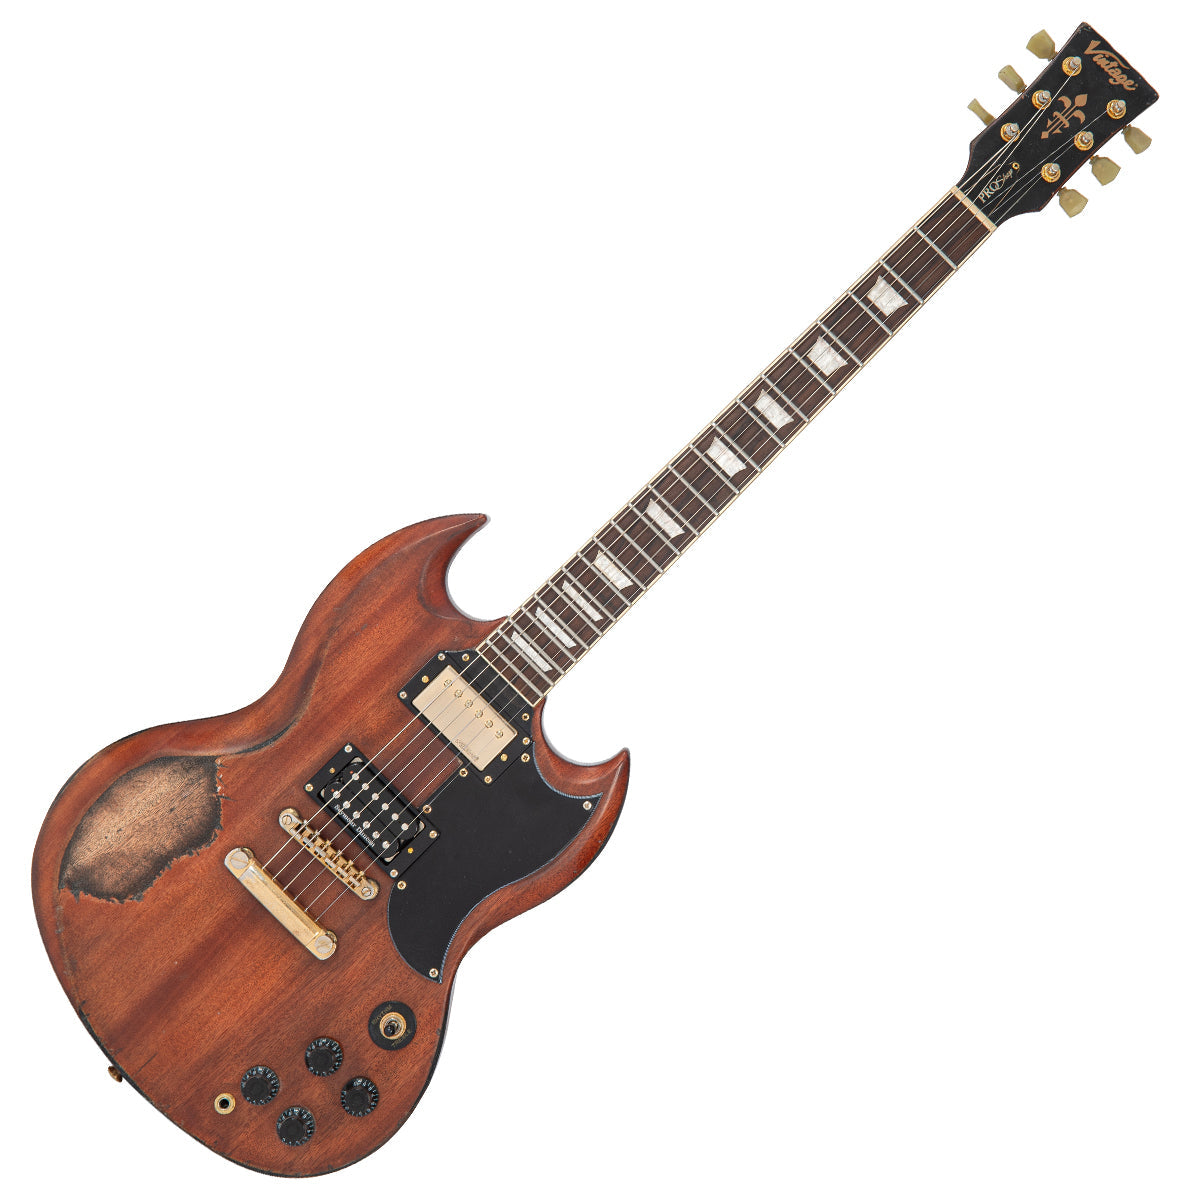 SOLD - Vintage VS6 ProShop Custom-Build ~ Heavy Relic Mahogany, Electric Guitars for sale at Richards Guitars.